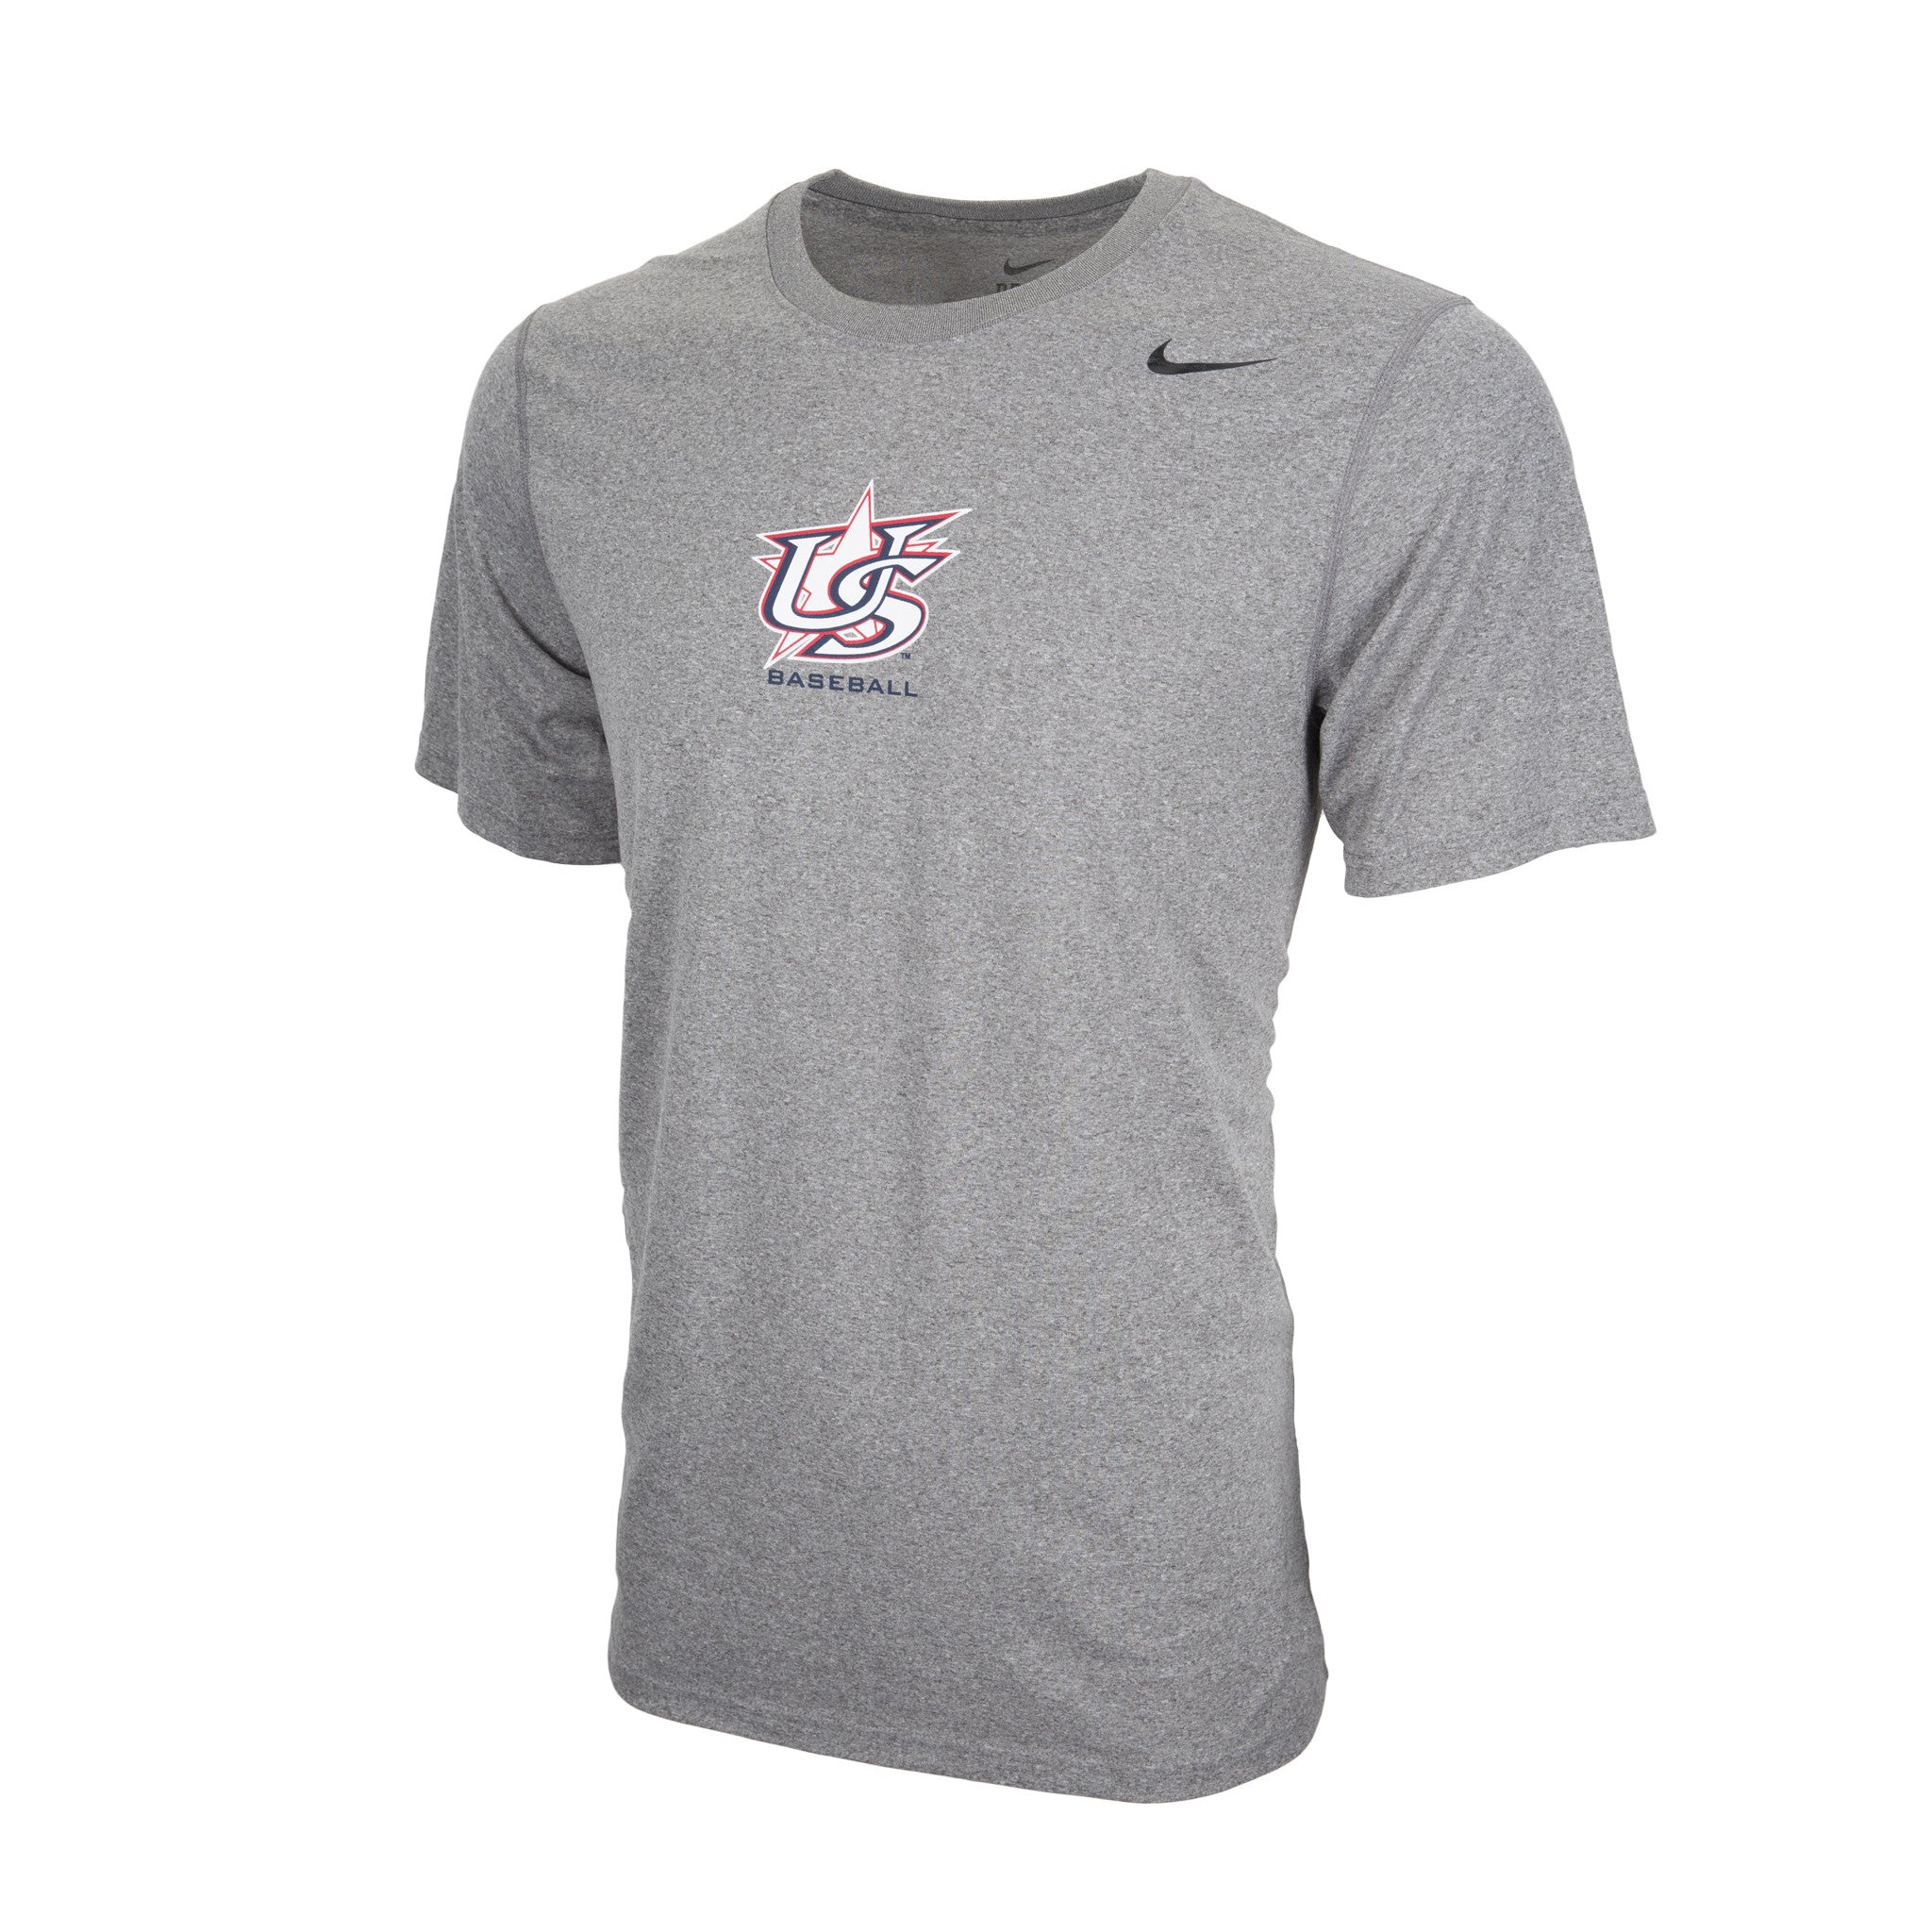 Dirtbags Over LB Baseball T-Shirt - Black, Nike